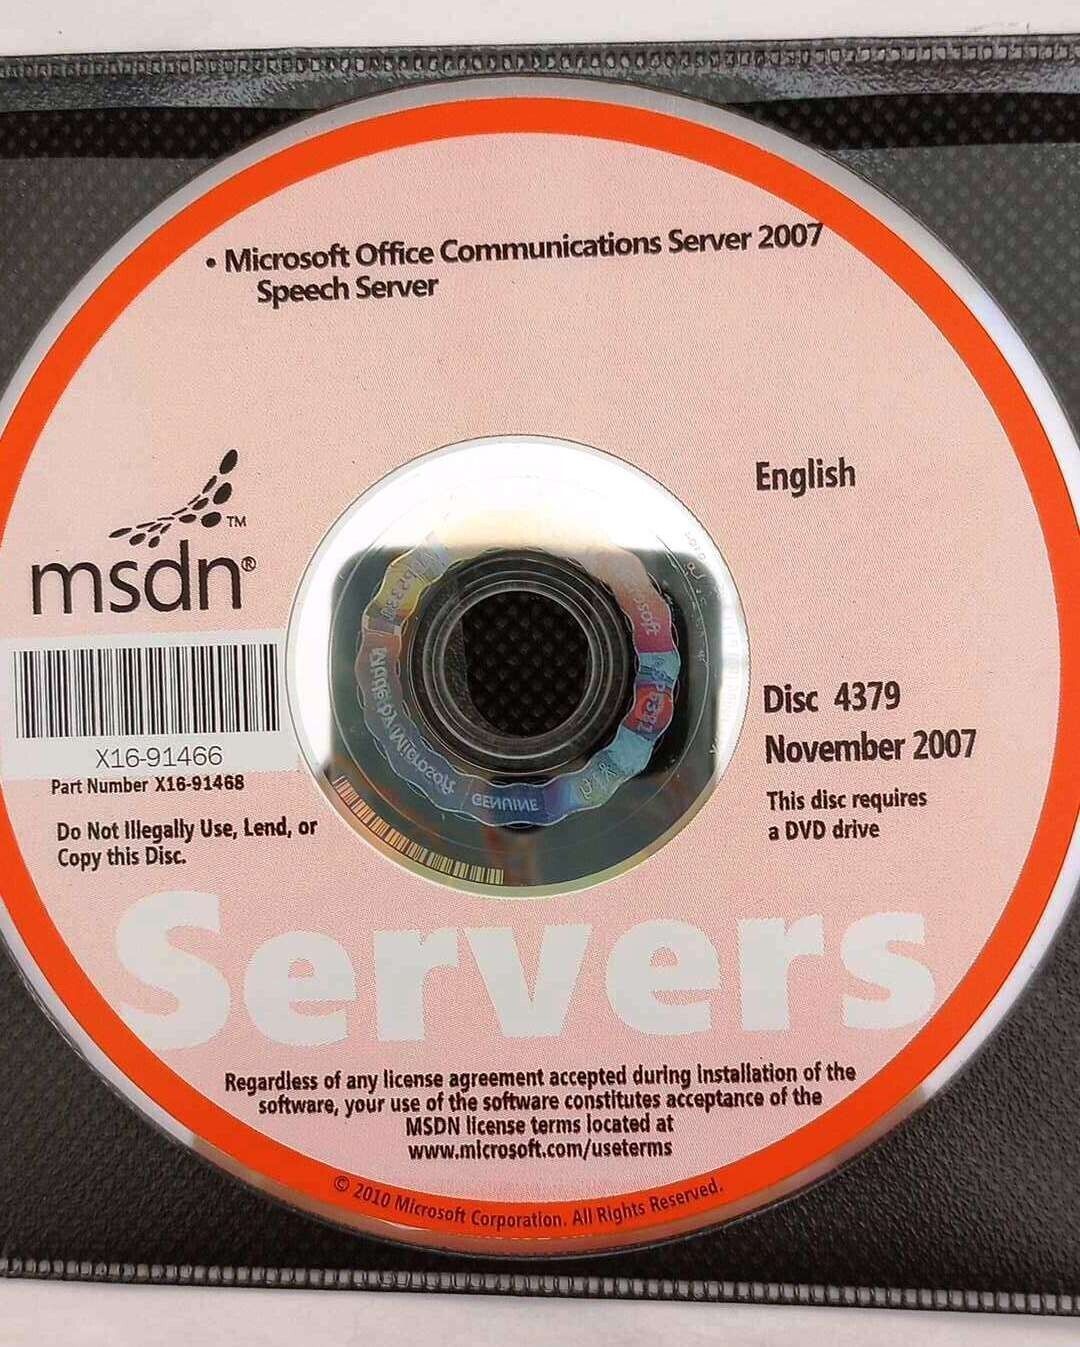 Microsoft Office Communications Server 2007 Speech Server Install CD w/ License